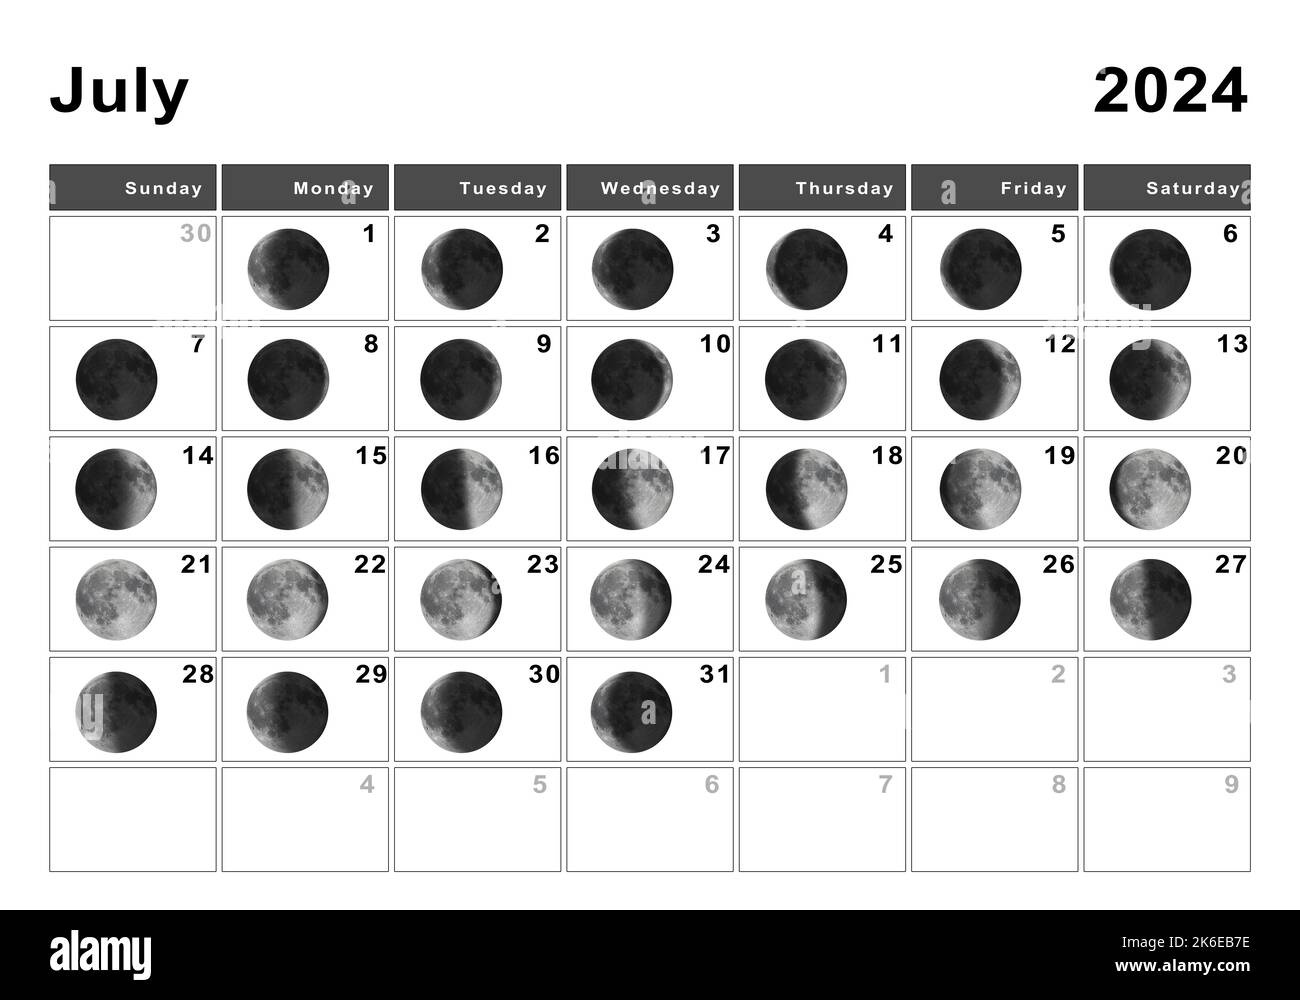 July 2024 Lunar Calendar, Moon Cycles, Moon Phases Stock Photo - Alamy throughout July 13 Lunar Calendar 2024